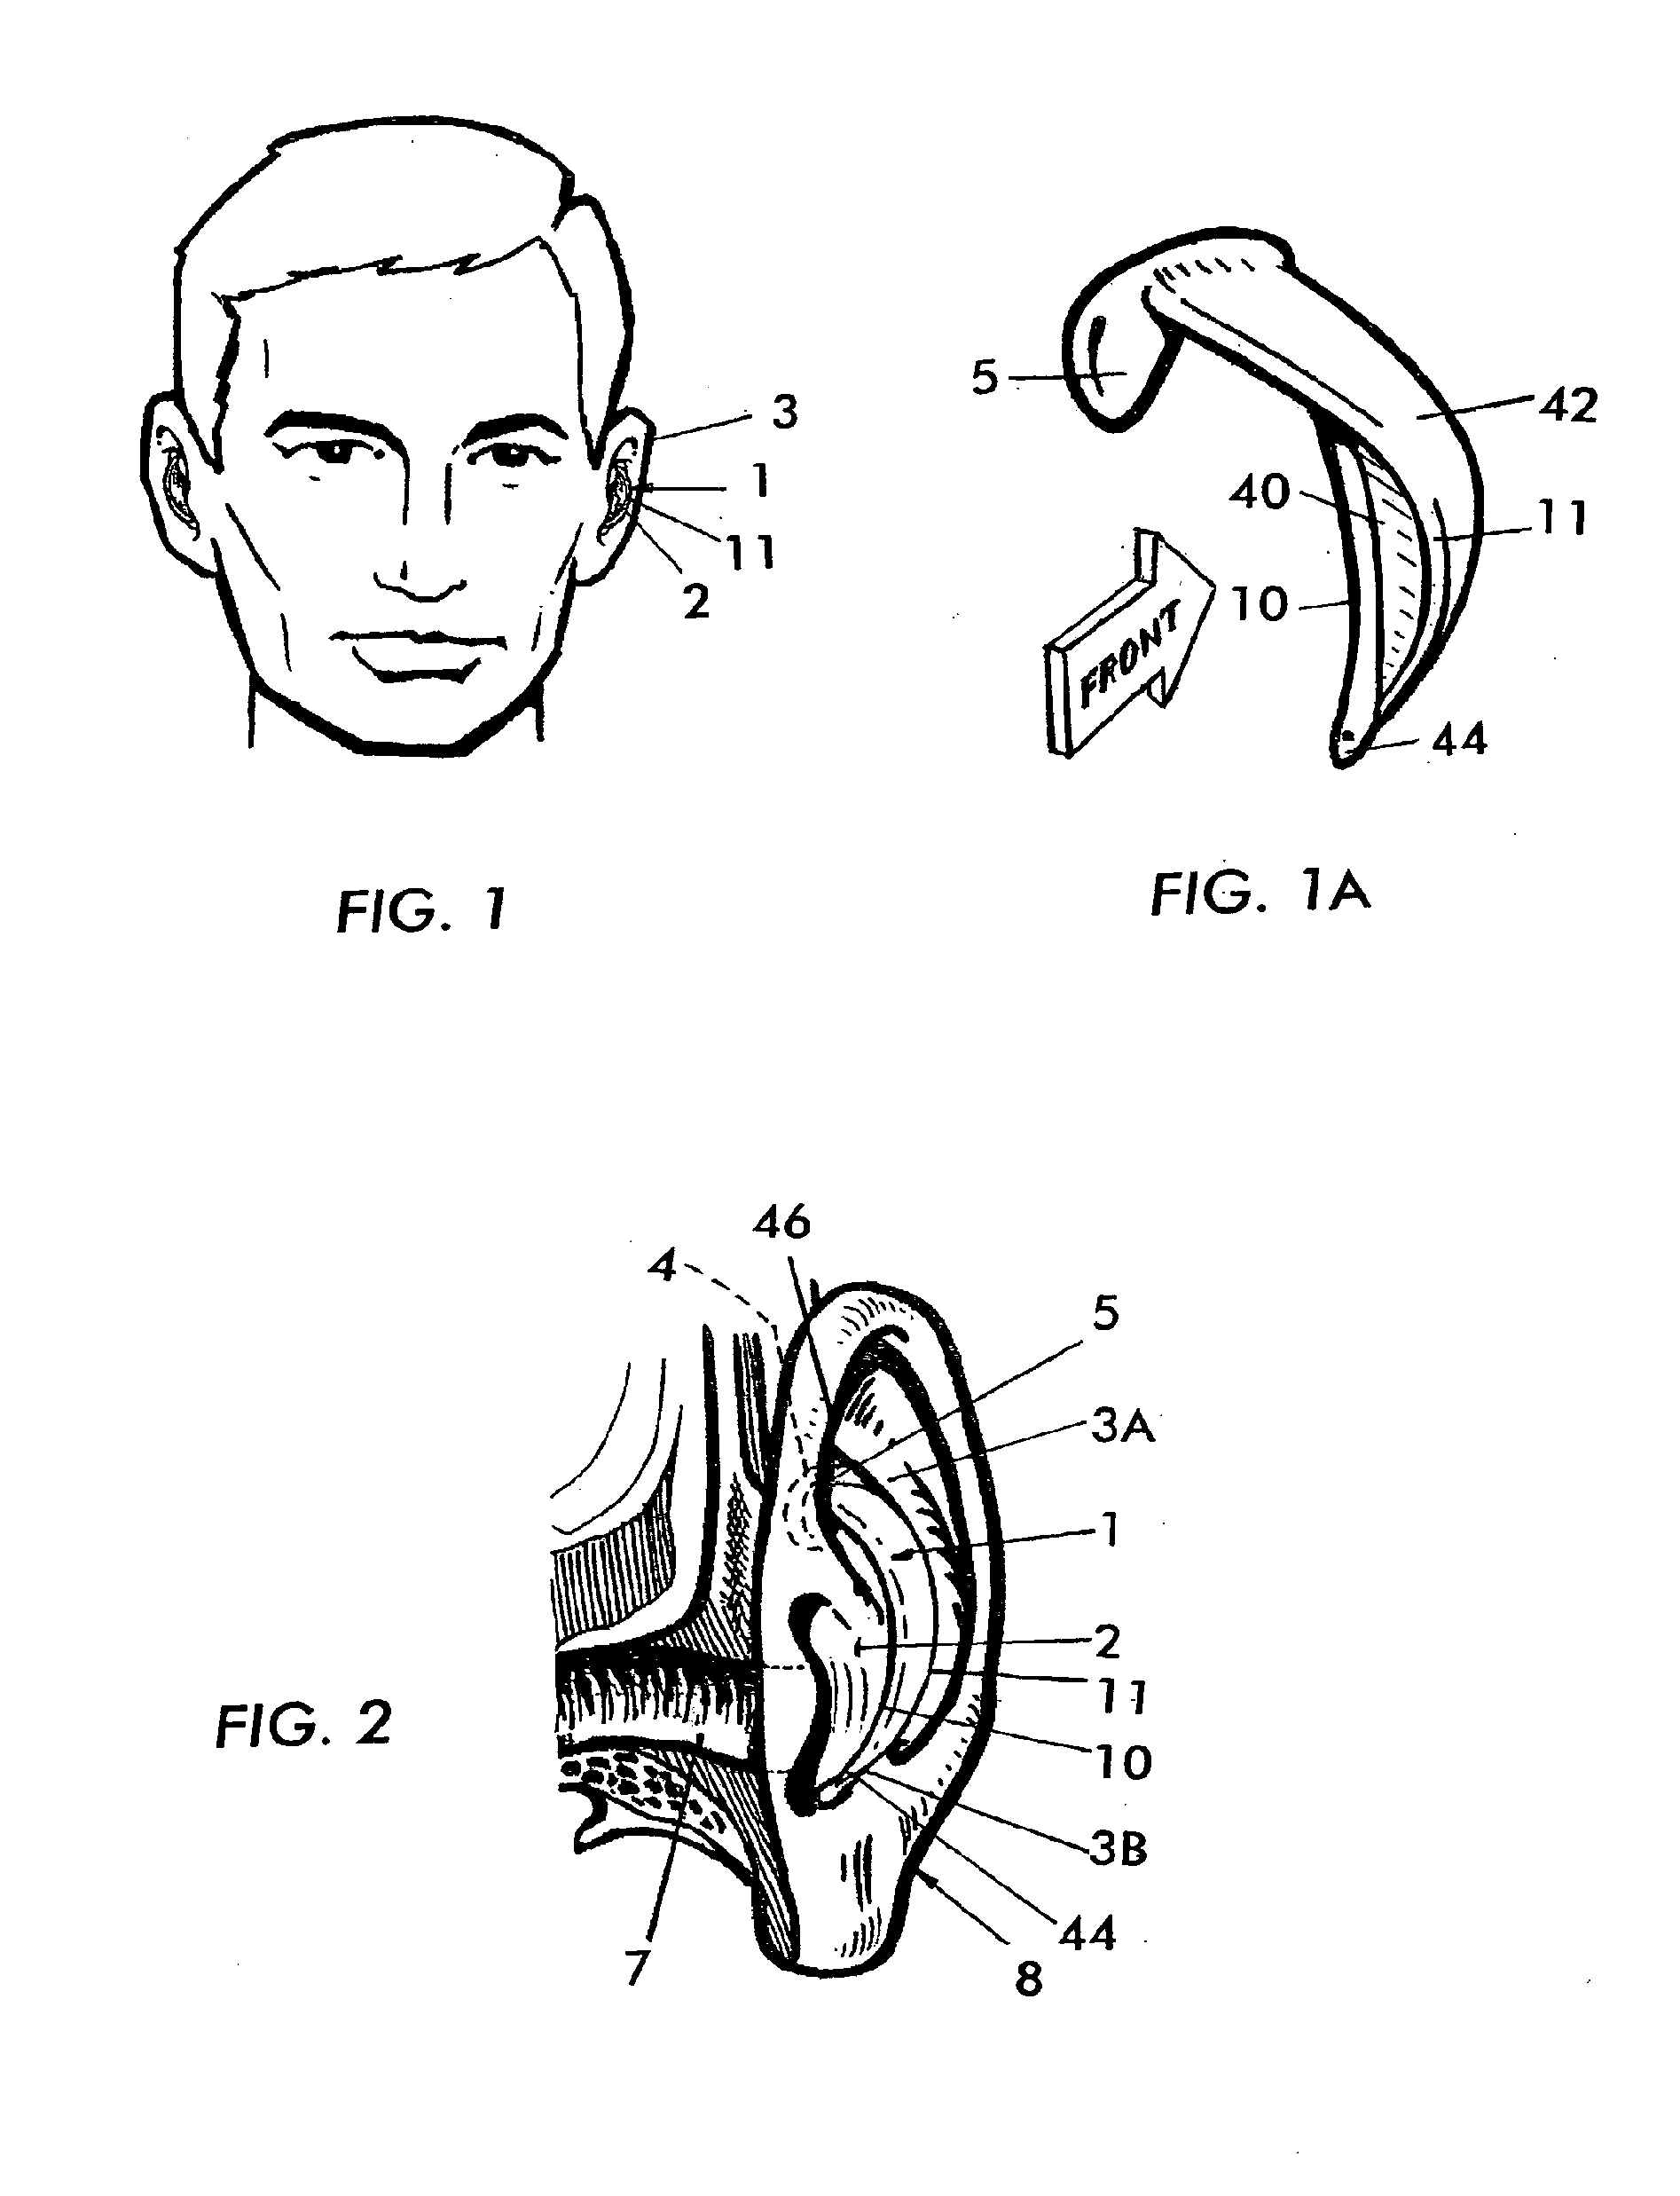 External ear insert for hearing comprehension enhancement